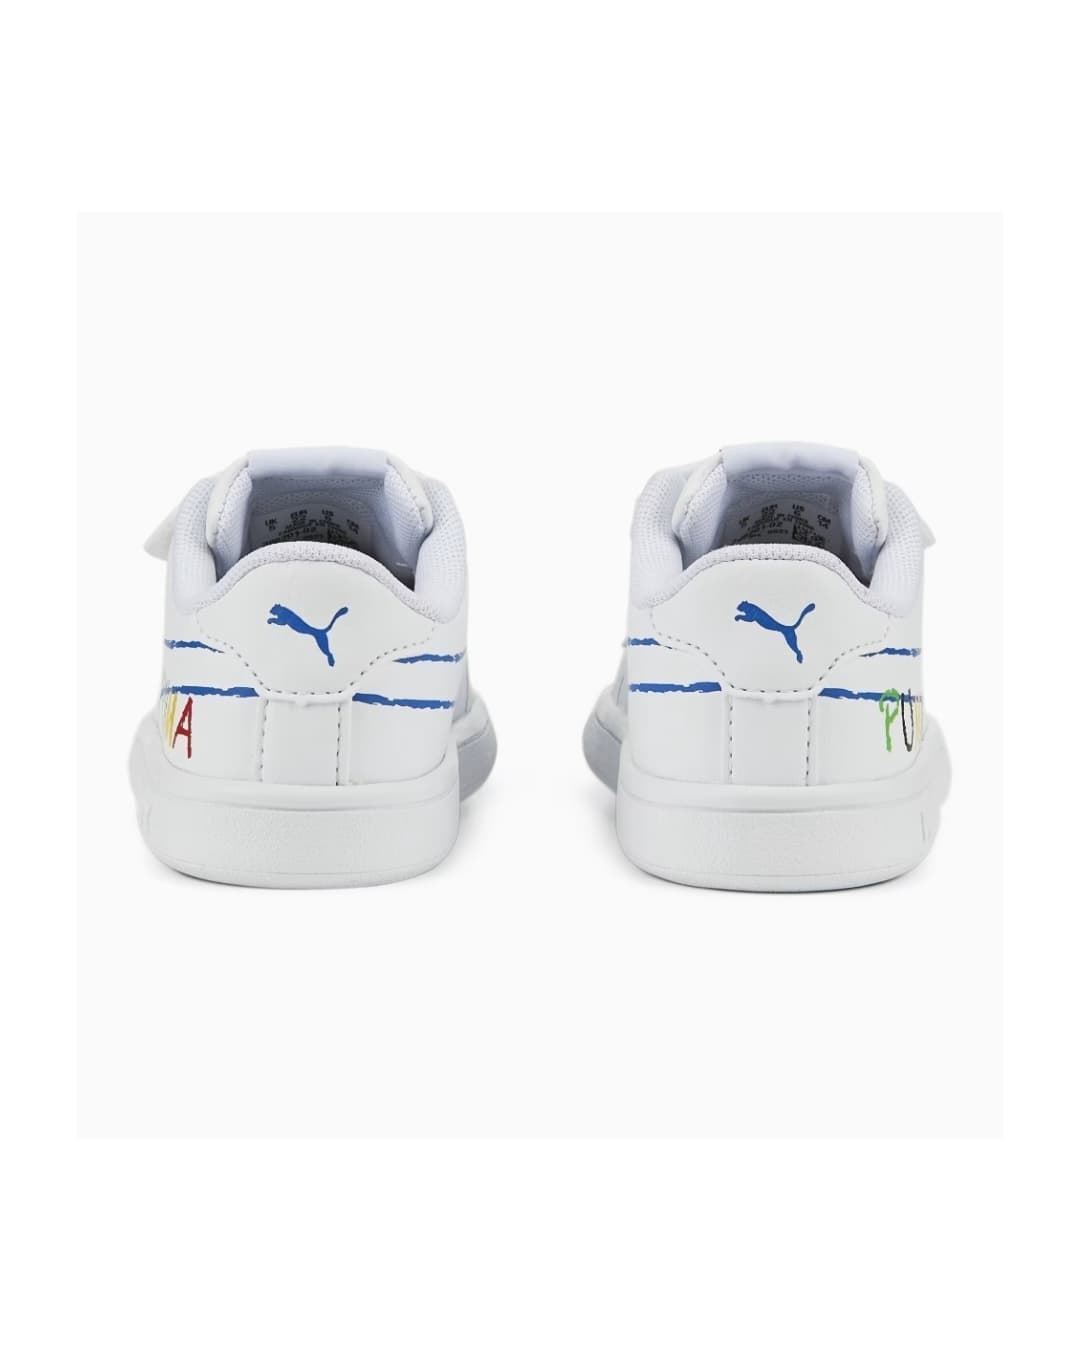 Puma Smash School White Sneakers for Kids - Image 3